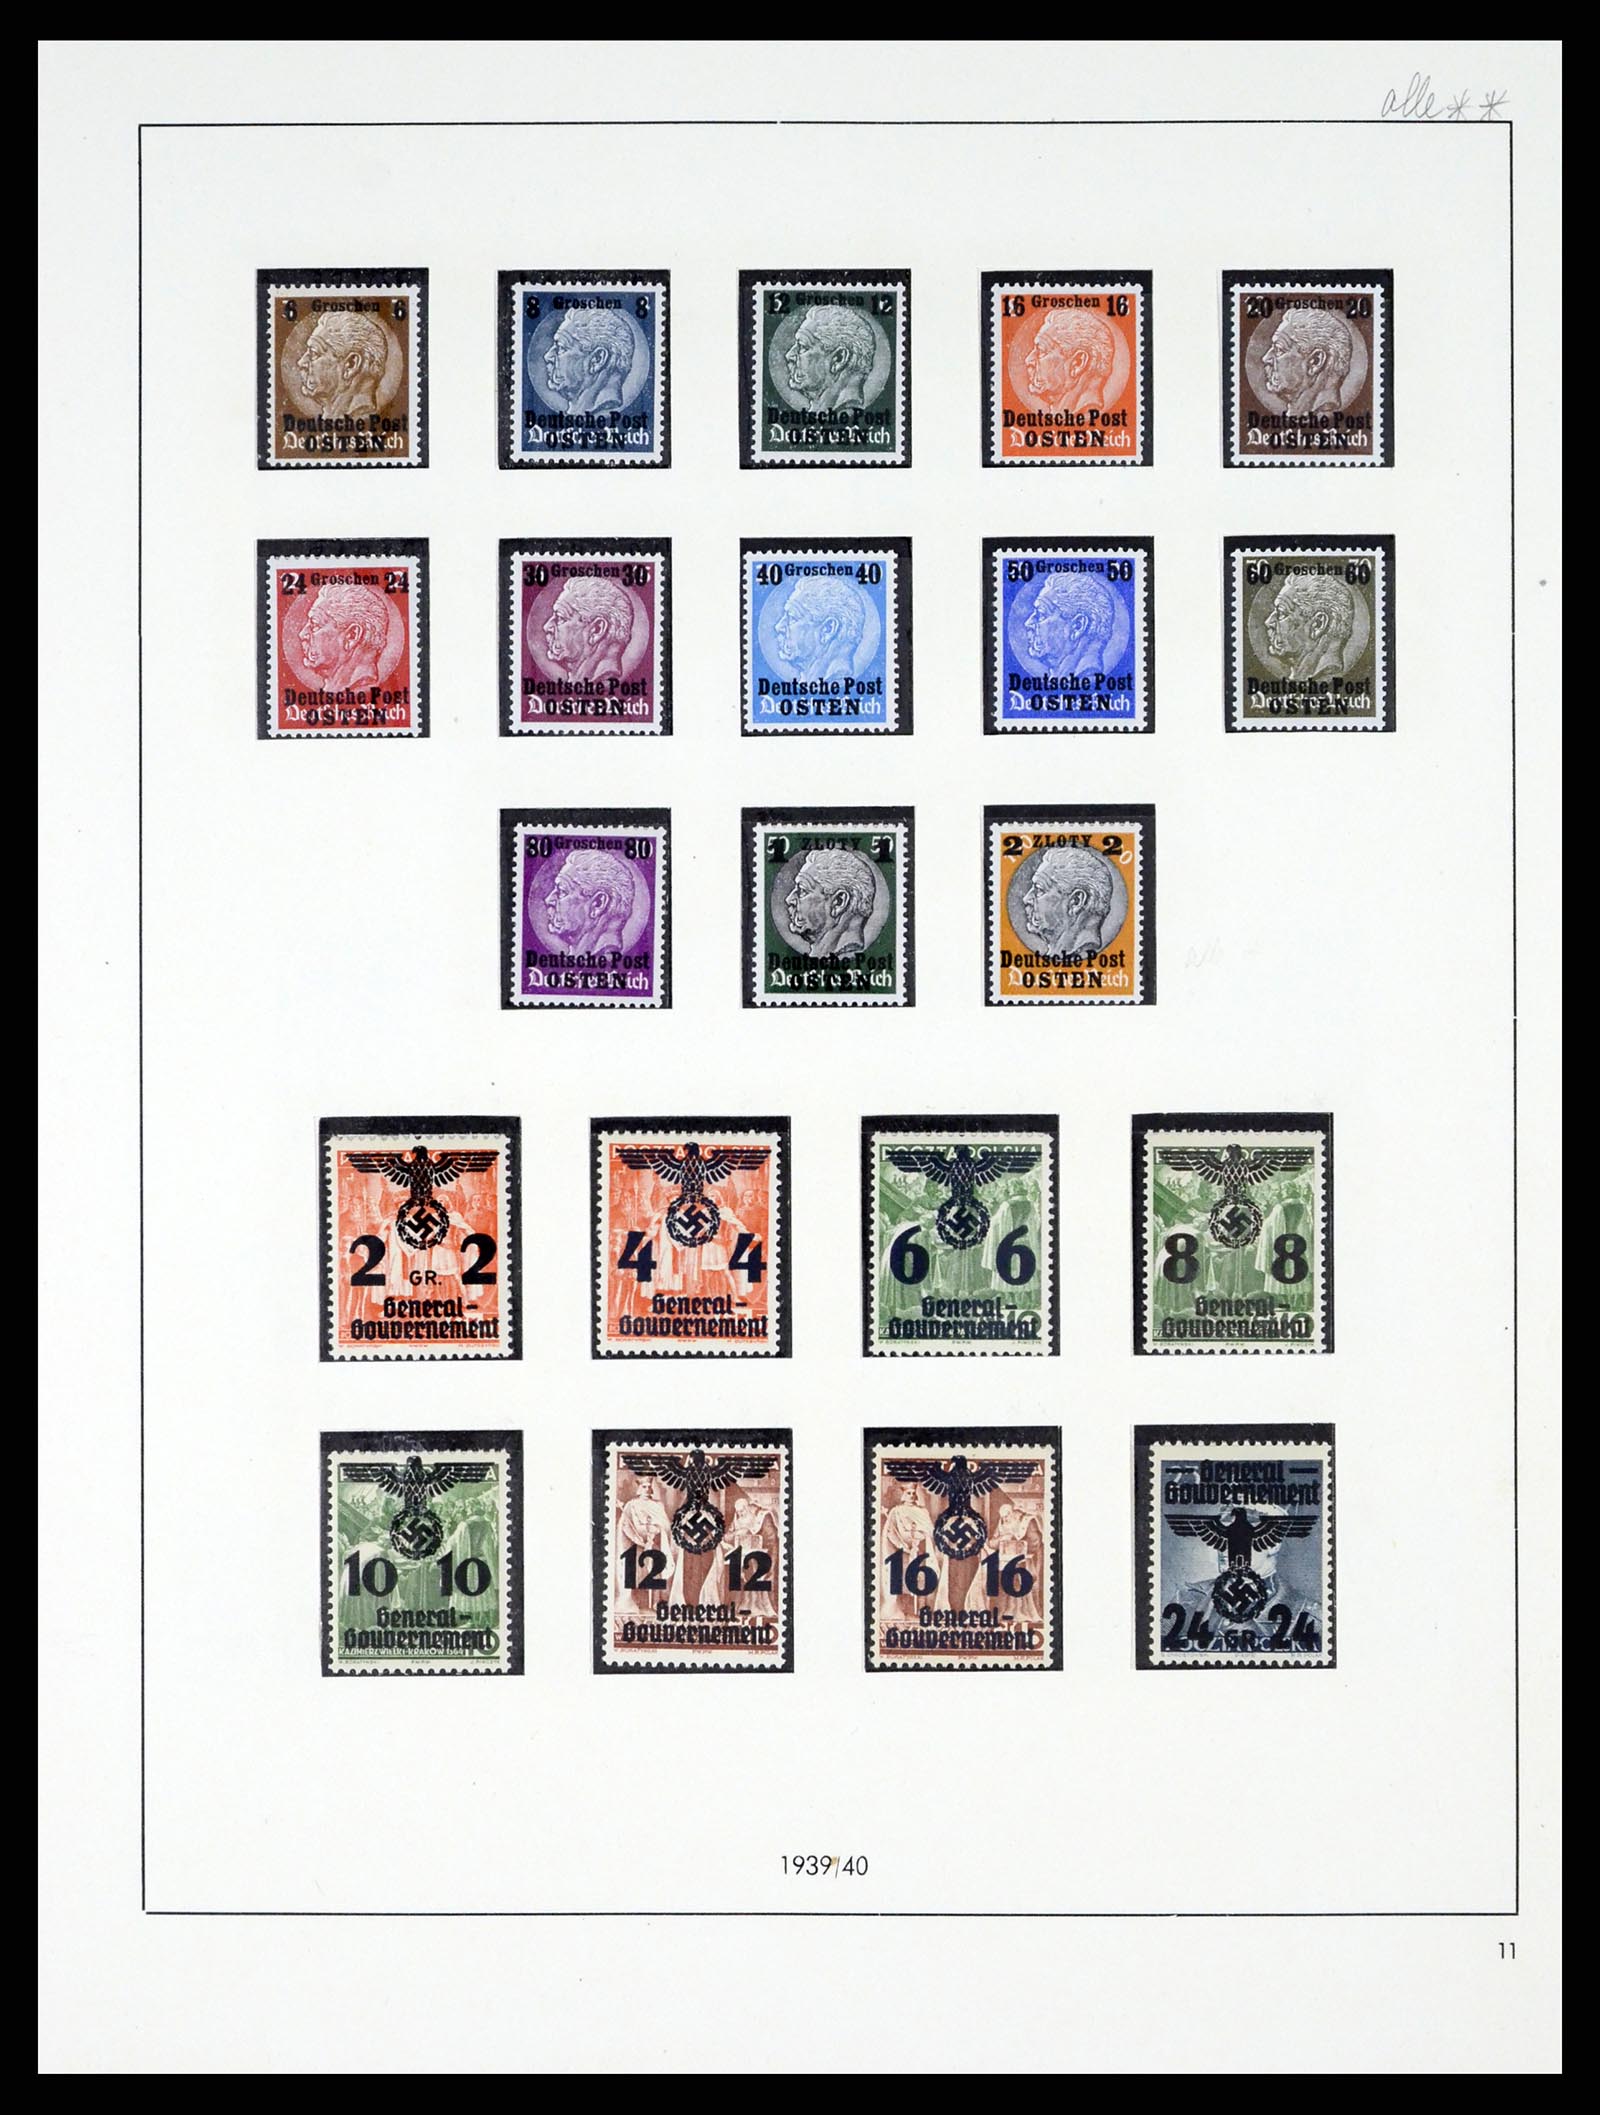 37535 042 - Stamp collection 37535 German occupation second worldwar 1939-1945.